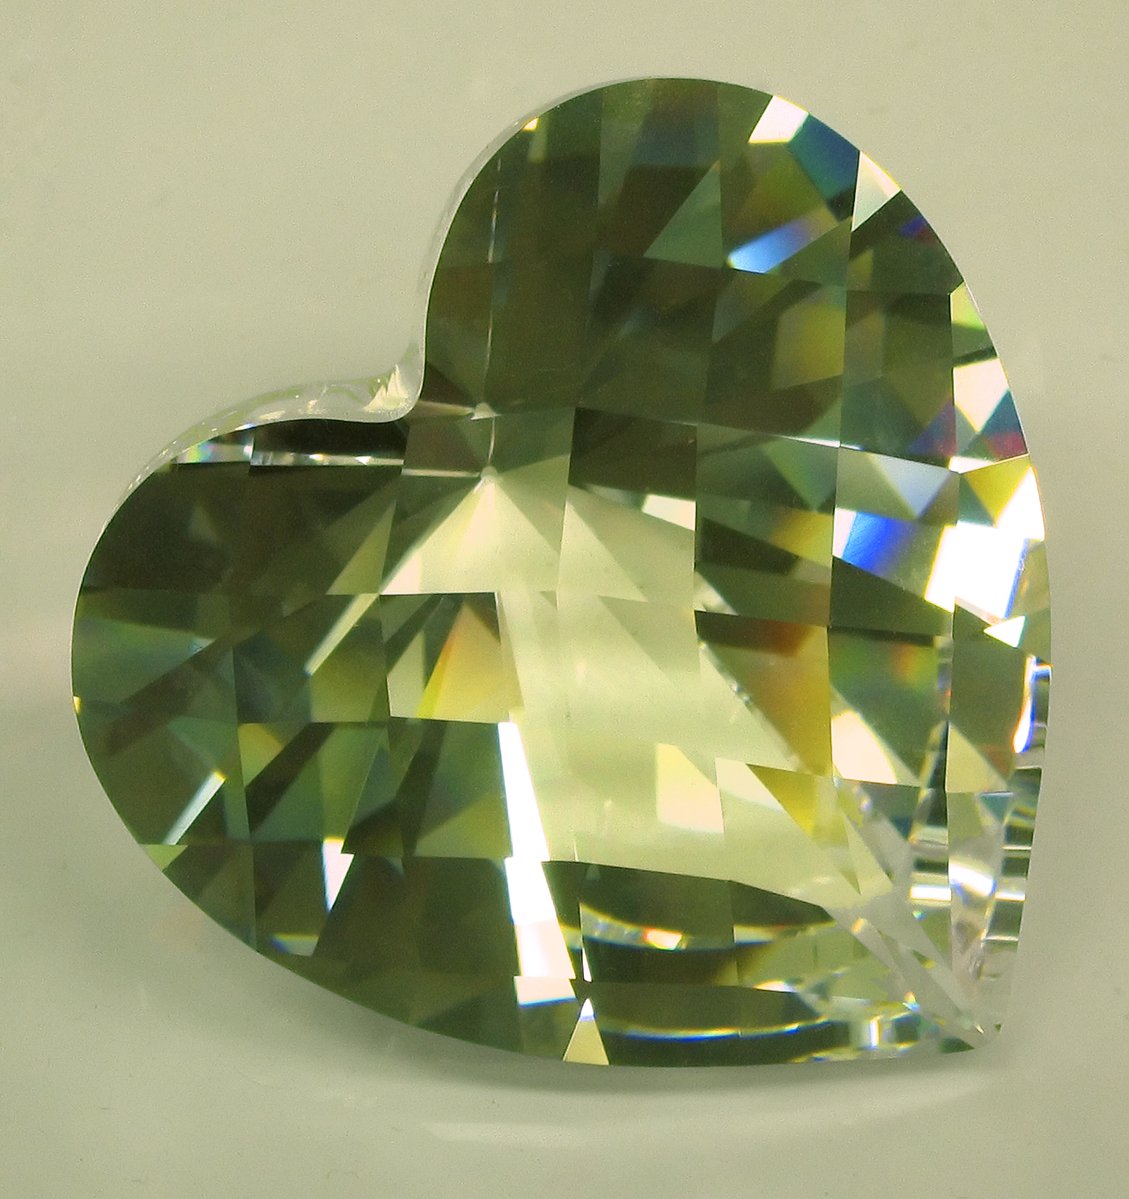 an green heart shape crystal stone